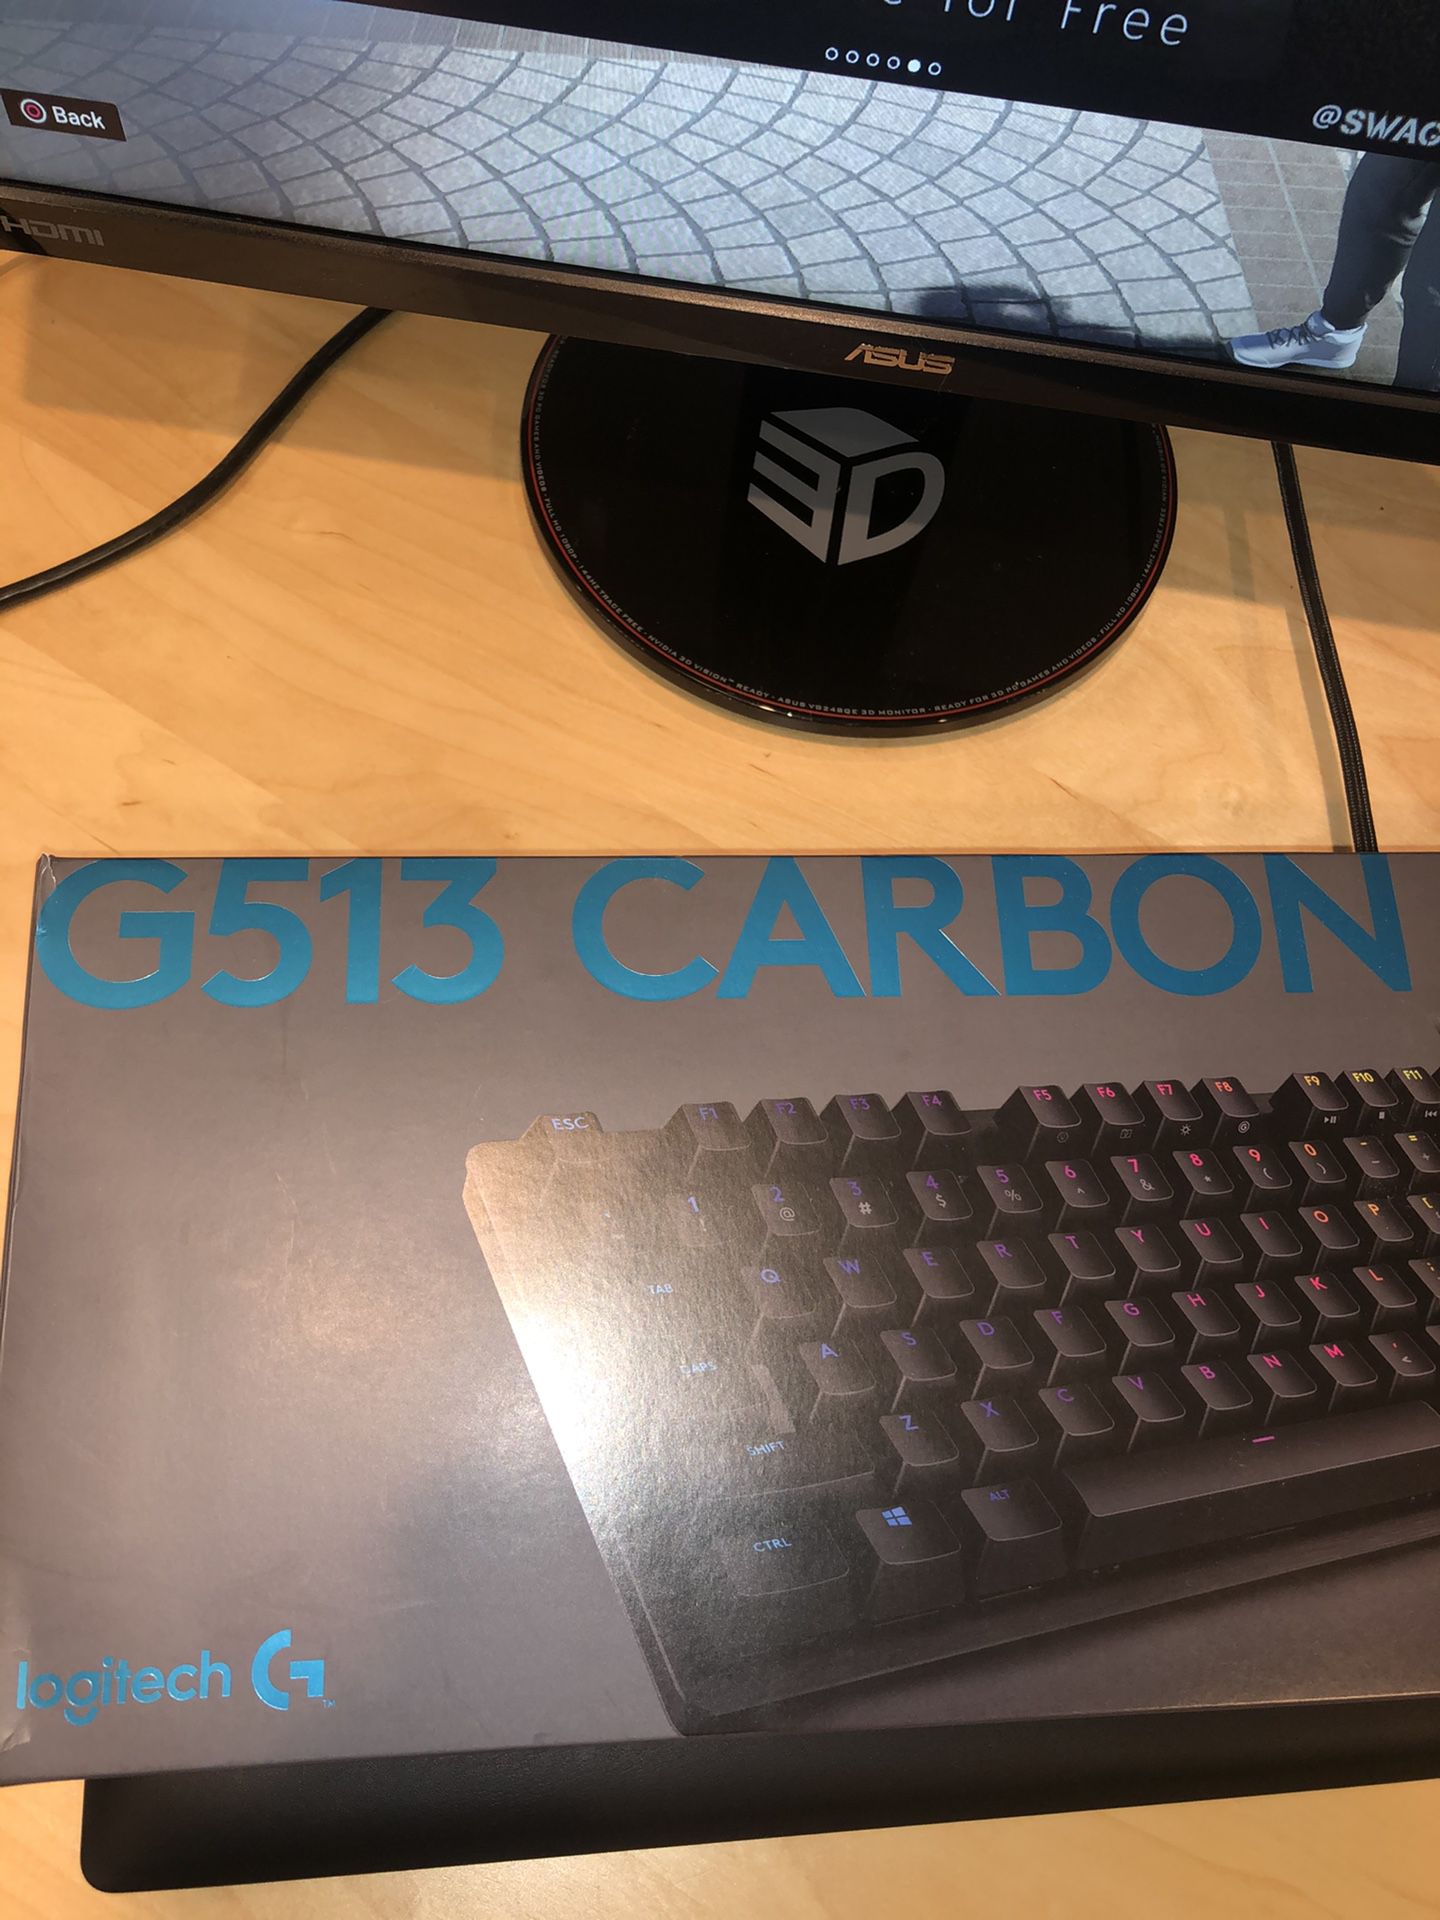 G513 Carbon Logitech Keyboard GX Blue Switches (satisfying)